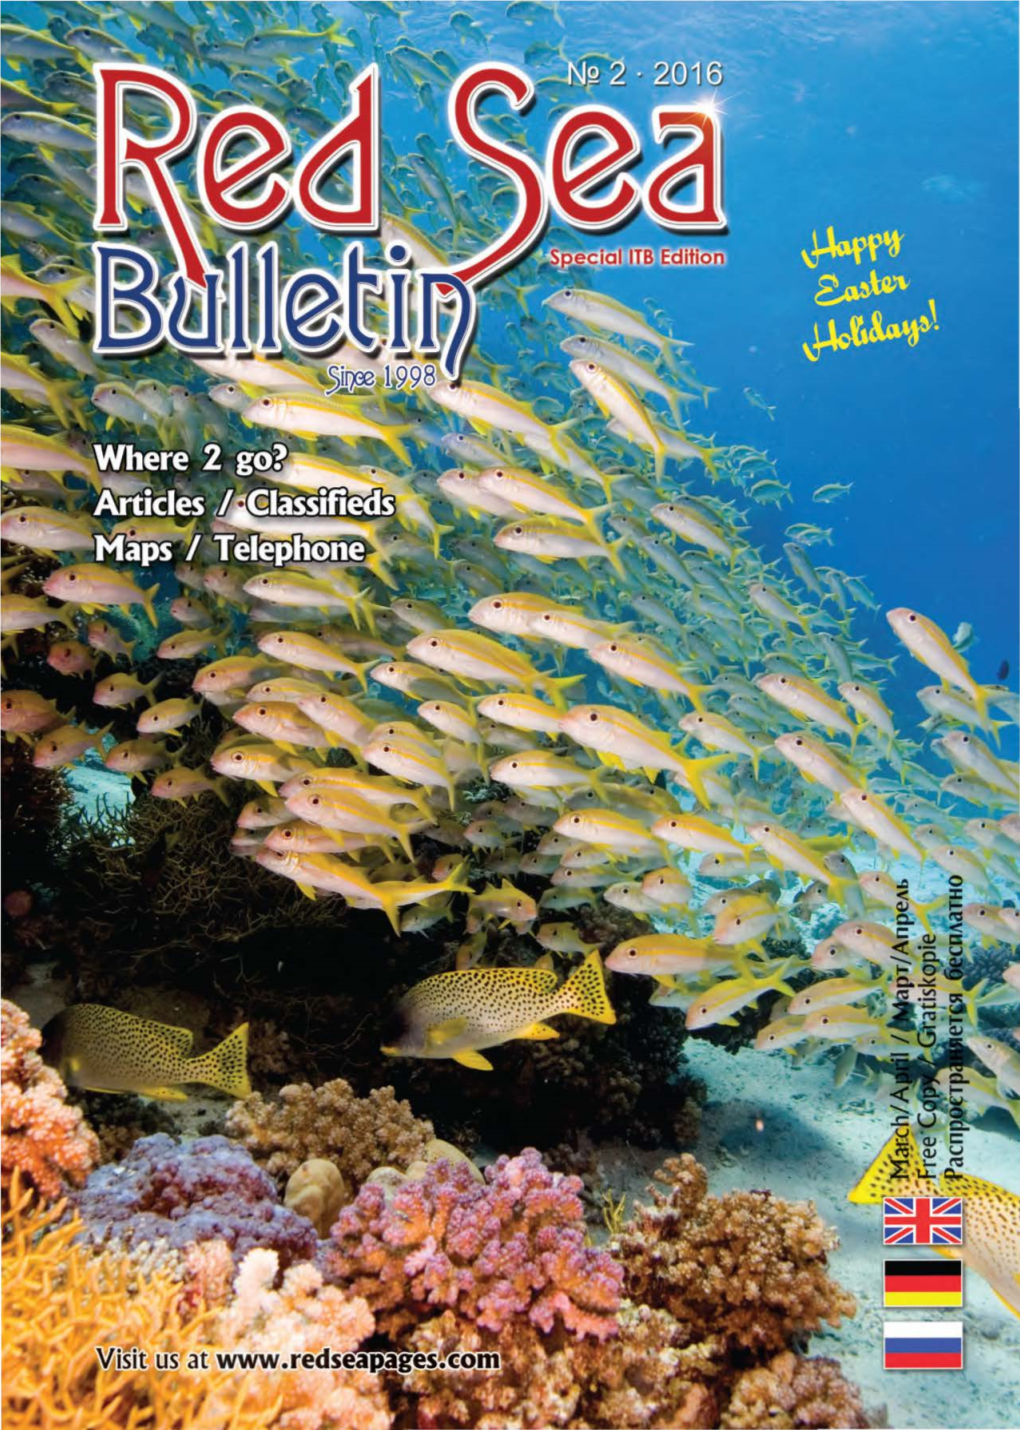 Red Sea Bulletin Ltd 11 Designed by 3D Abdoo Web Design & Development